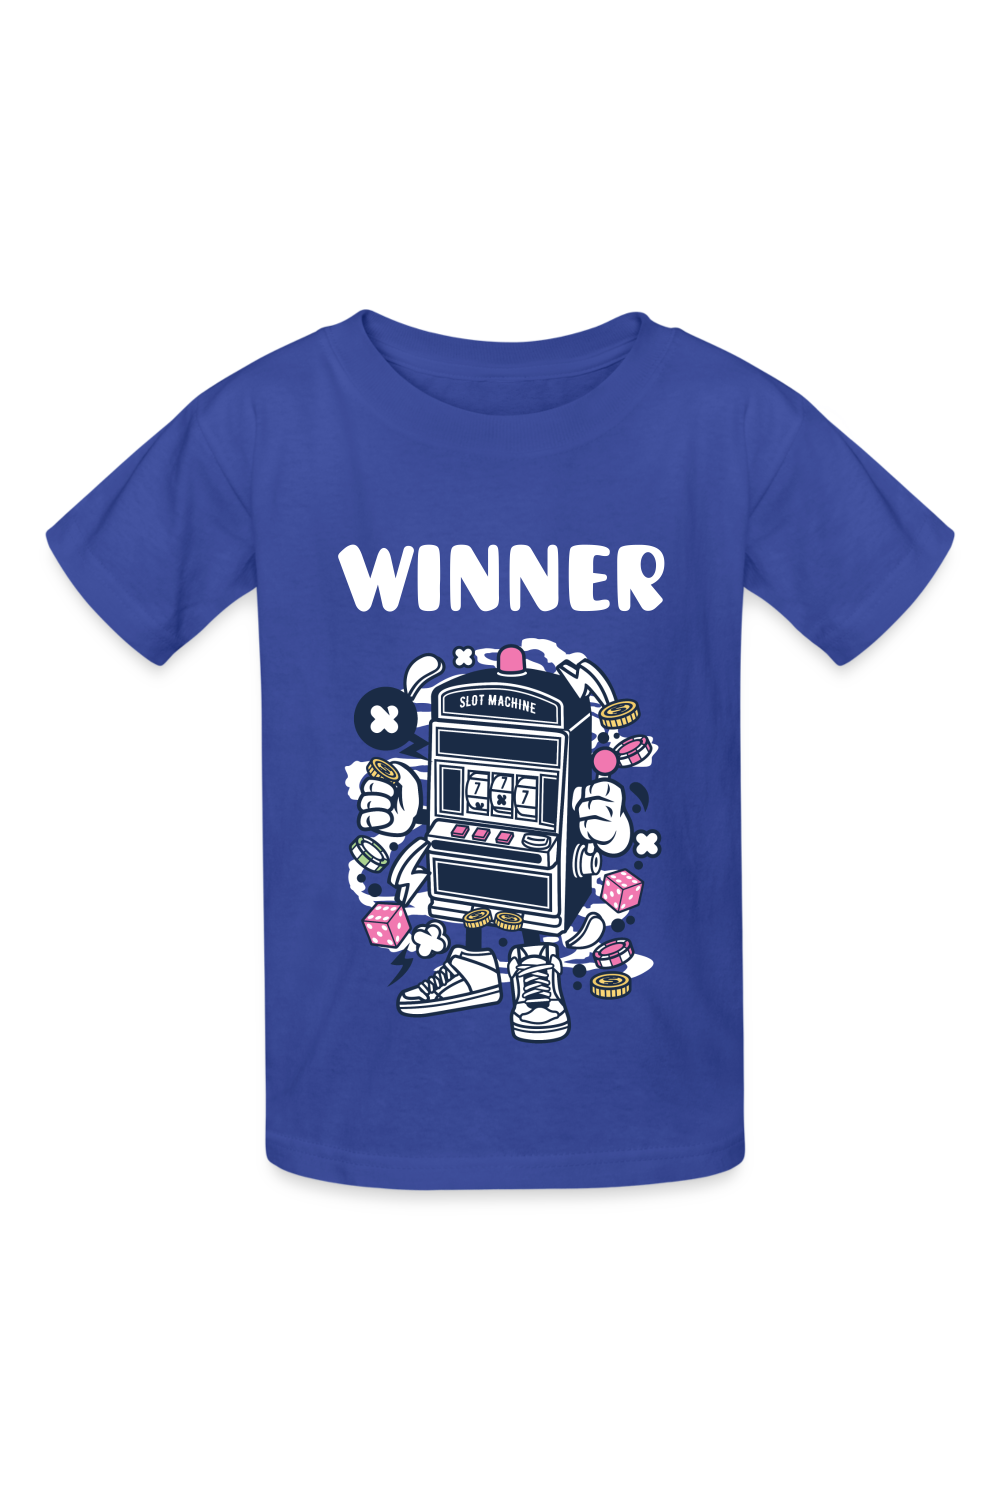 Boys Winner Slot Machine Short Sleeve T-Shirt - royal blue - NicholesGifts.online